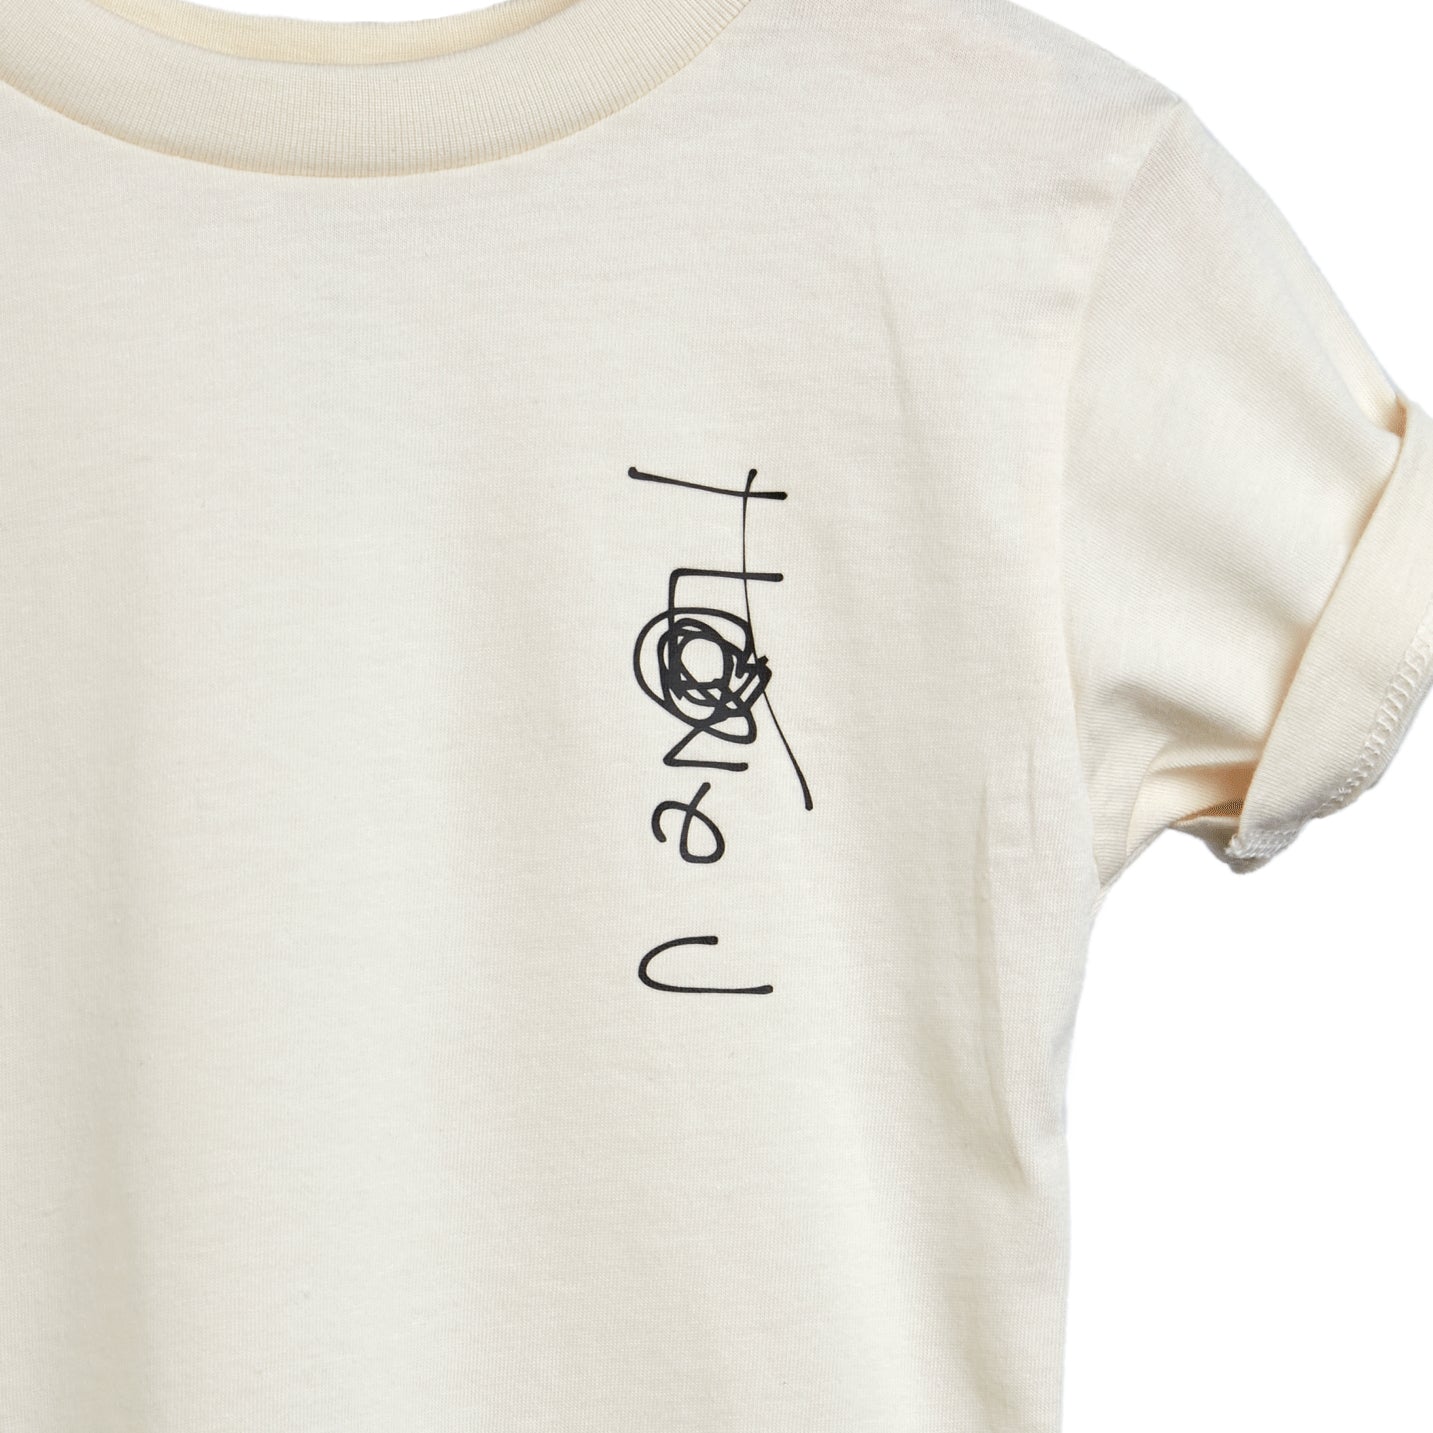 UNIQUE I Love U t-shirt for children. 100% cotton kids t-shirt printed with the original art work of SKINS LA